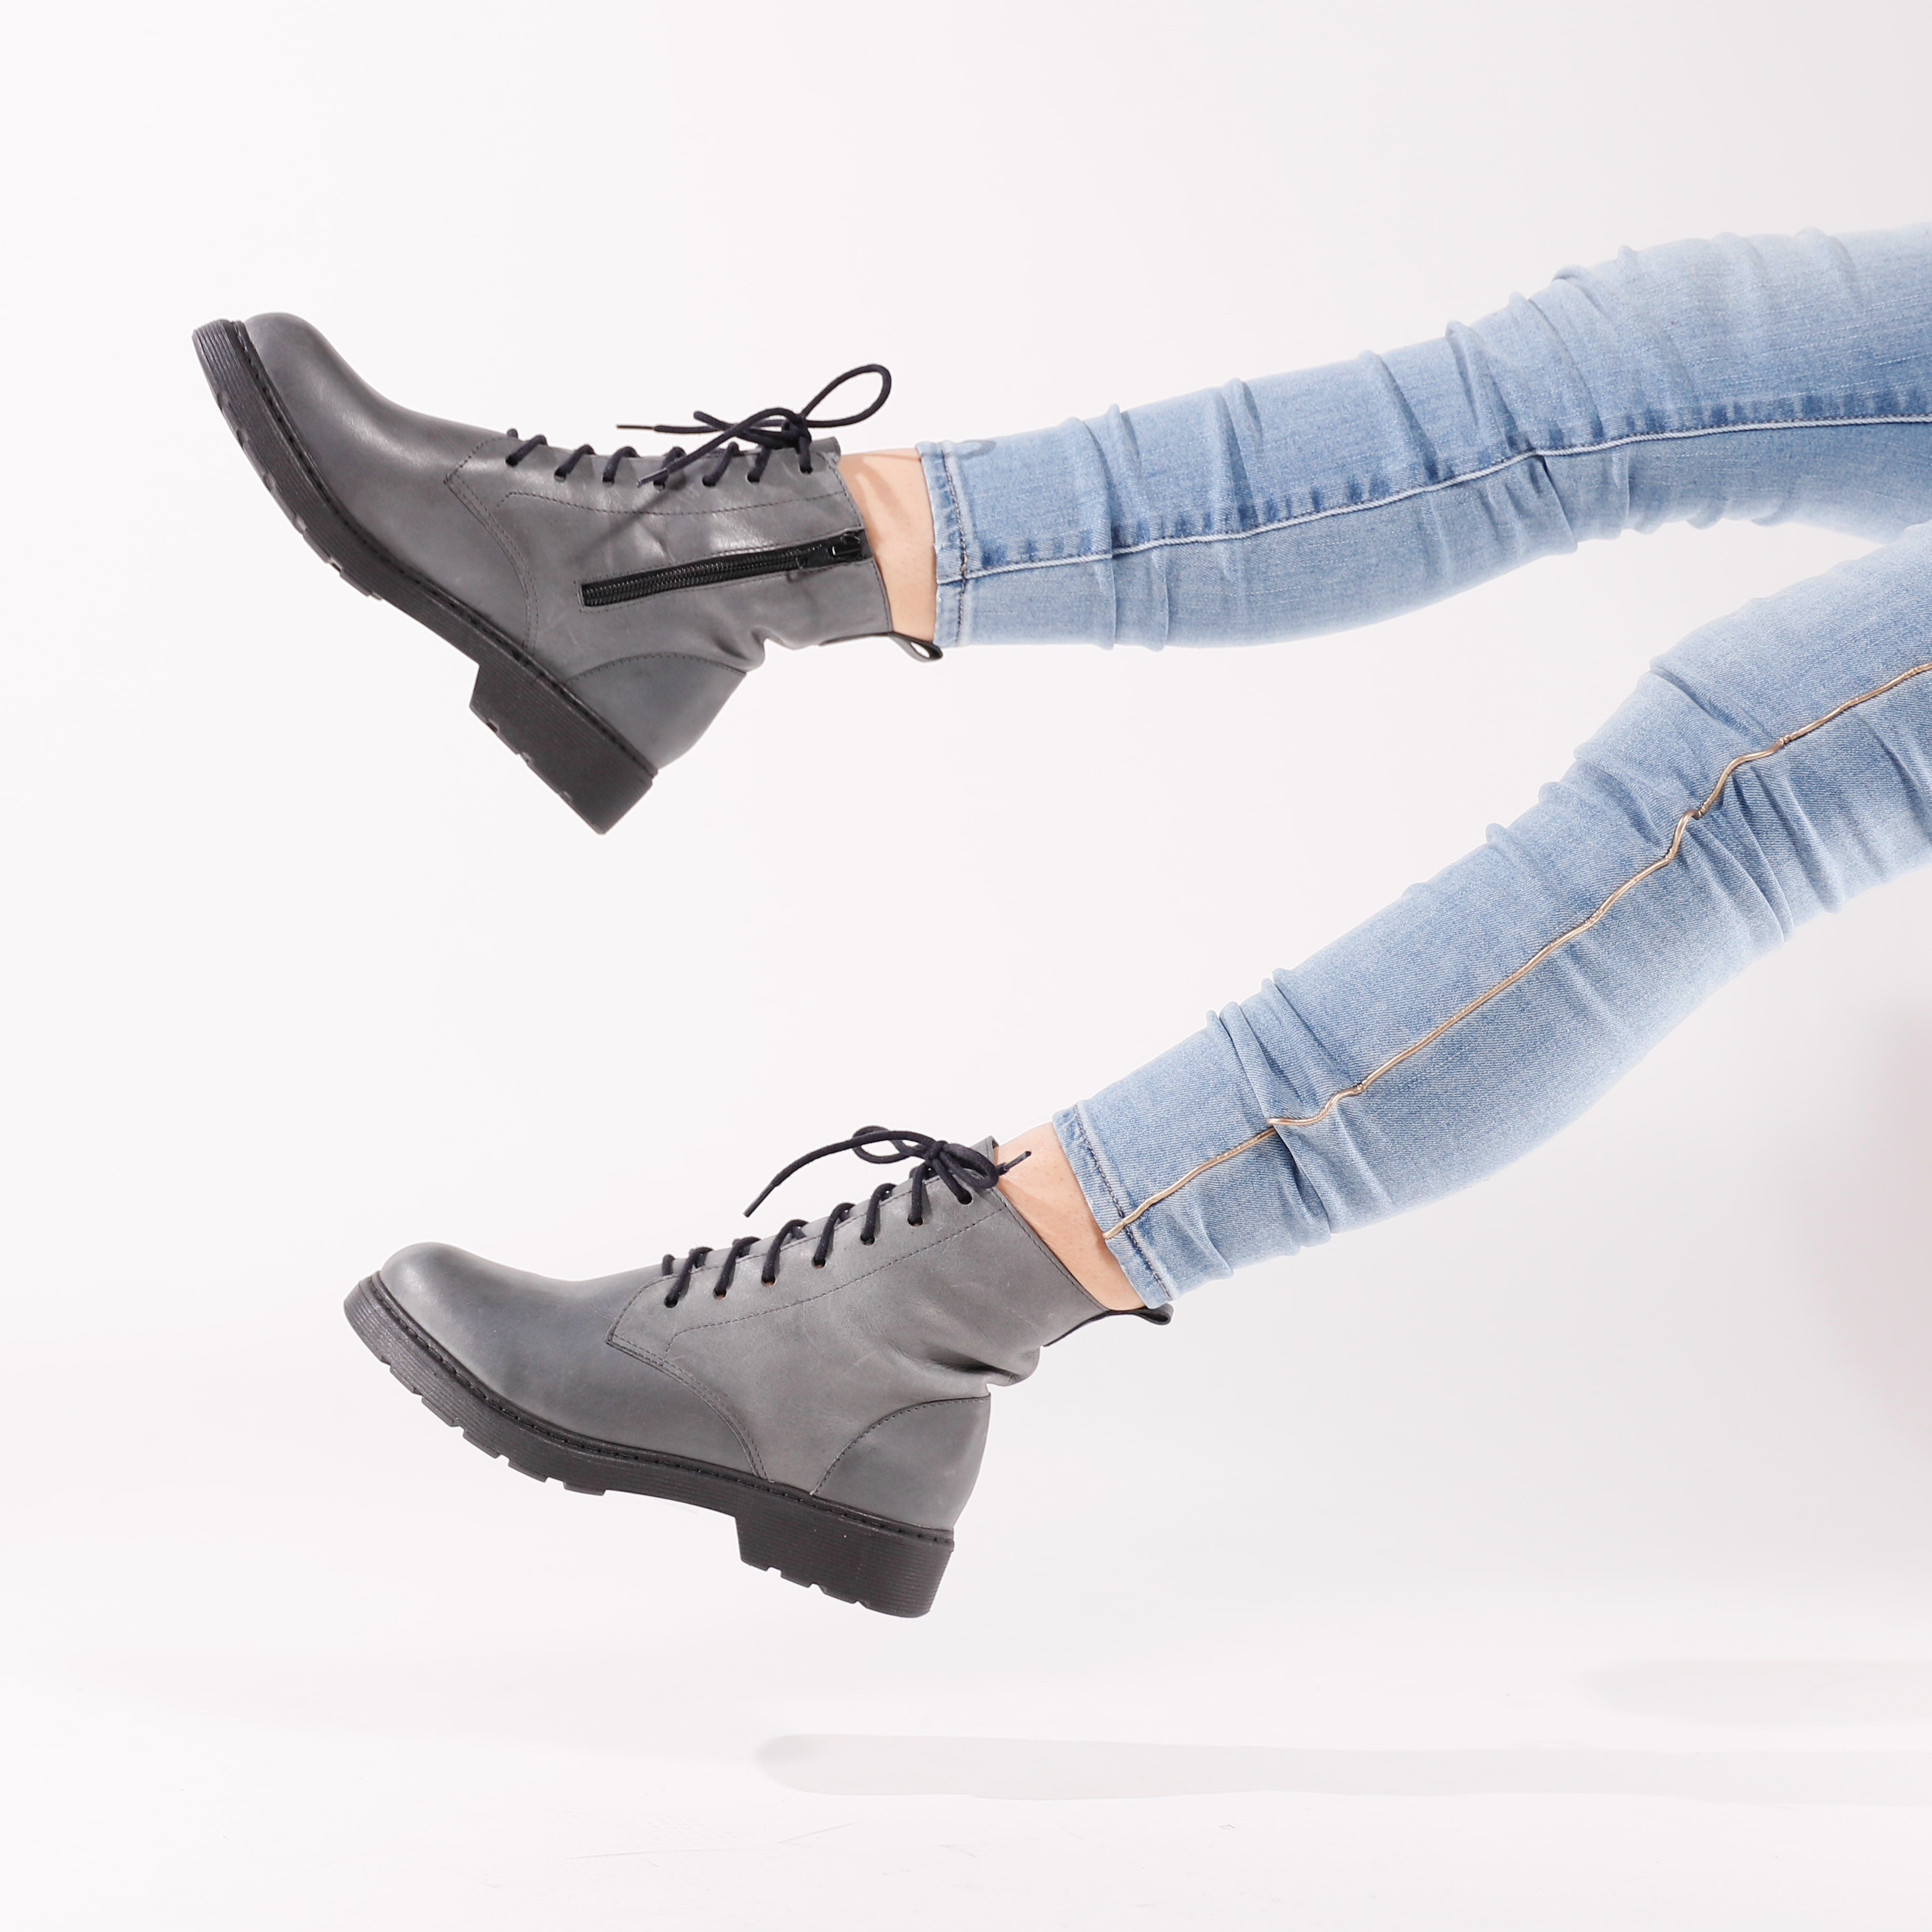 womens designer combat boots